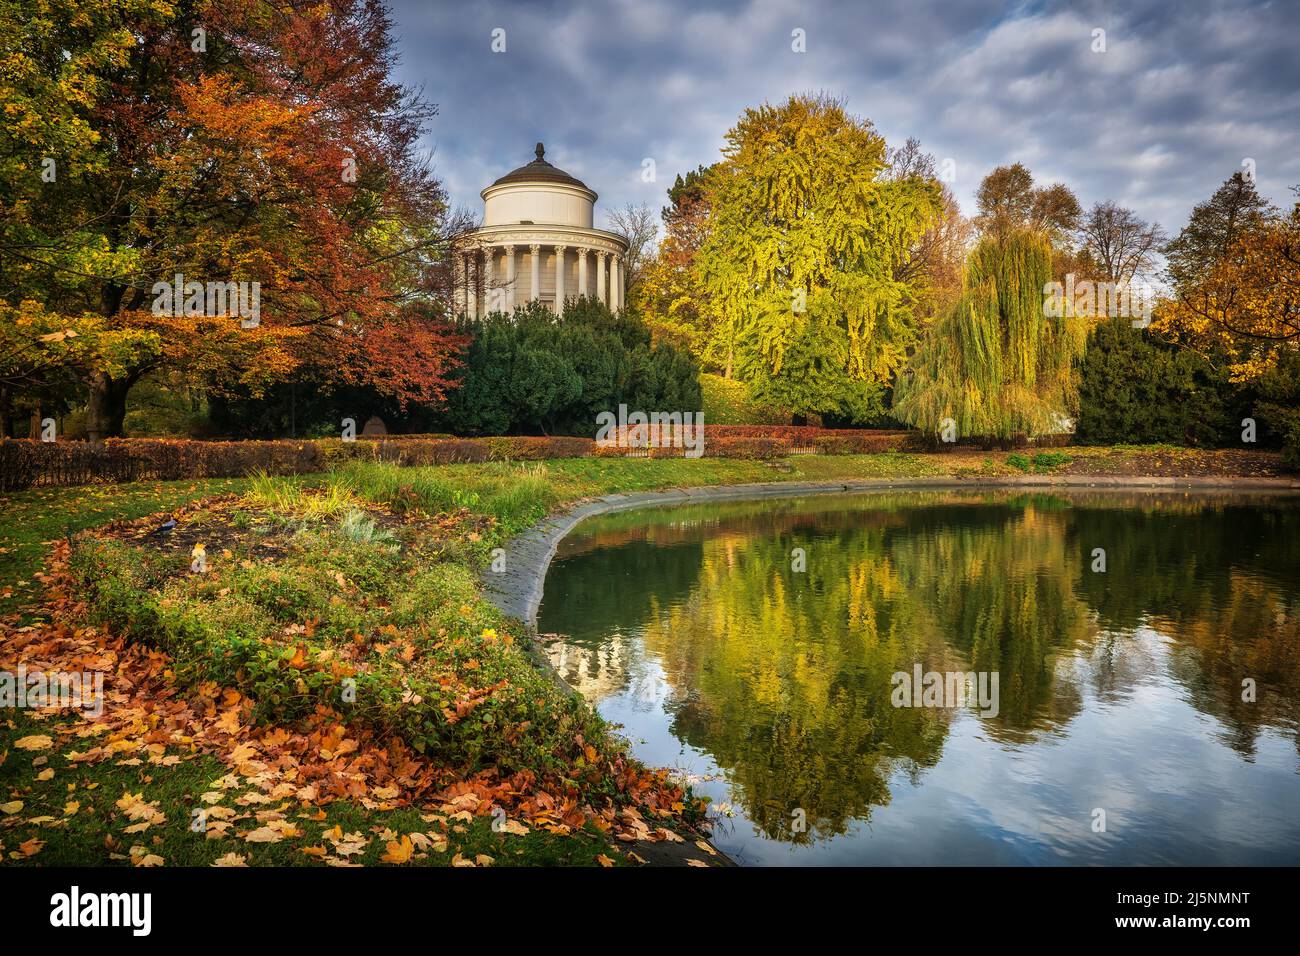 Poland, Warsaw, the Saxon Garden (Polish: Ogród Saski) autumn landscape with pond and historic water tower. Stock Photo